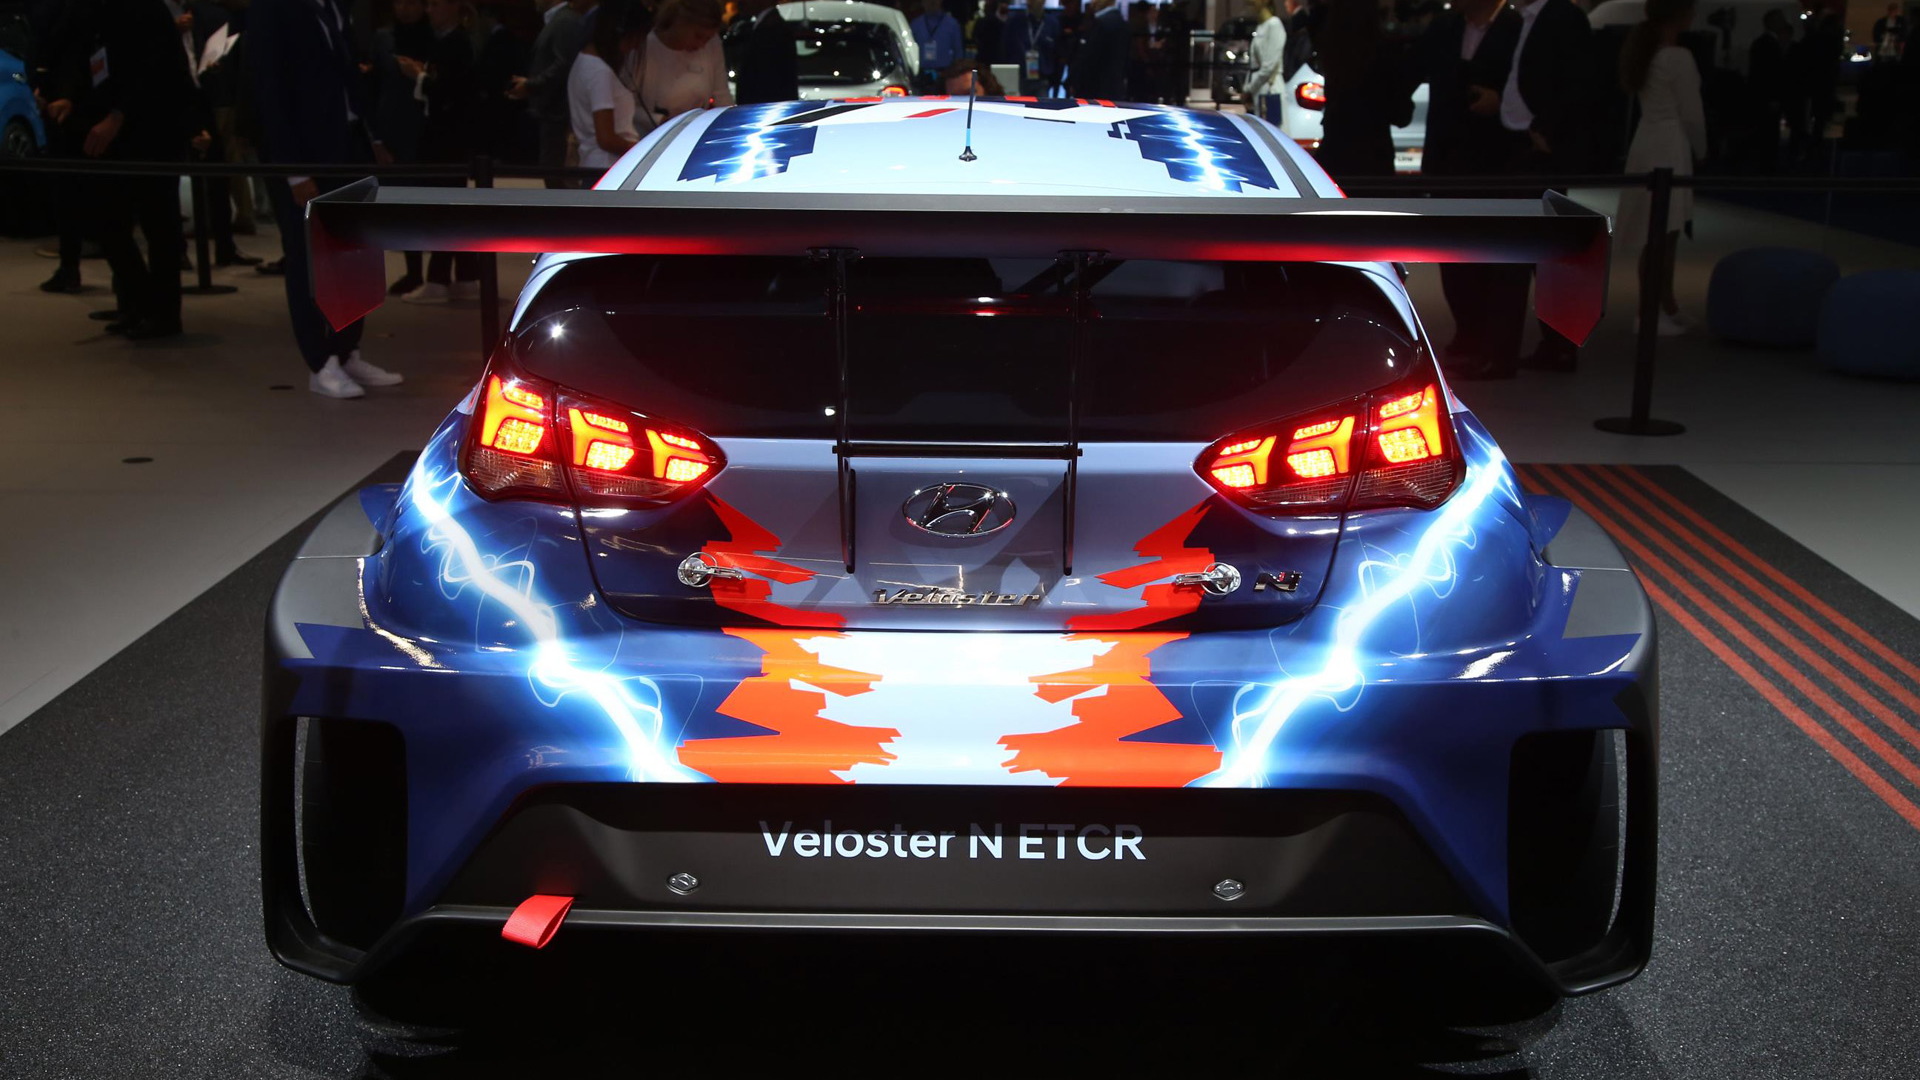 2020 Hyundai Veloster N ETCR race car